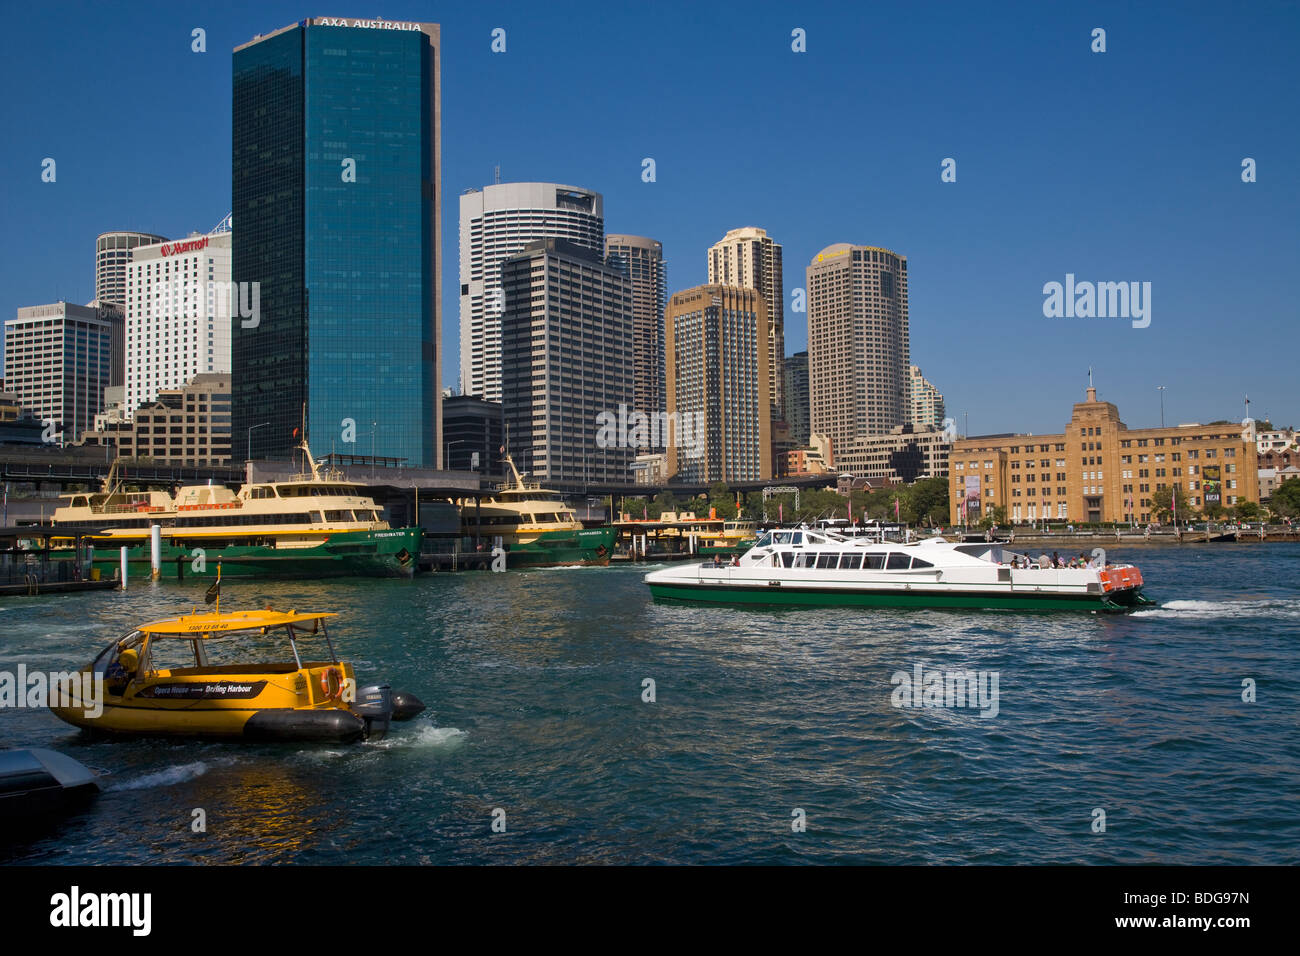 Australia, NSW, Sydney, Sydney Cove, view of Circular Quay with Sydney Harbour ferries Stock Photo